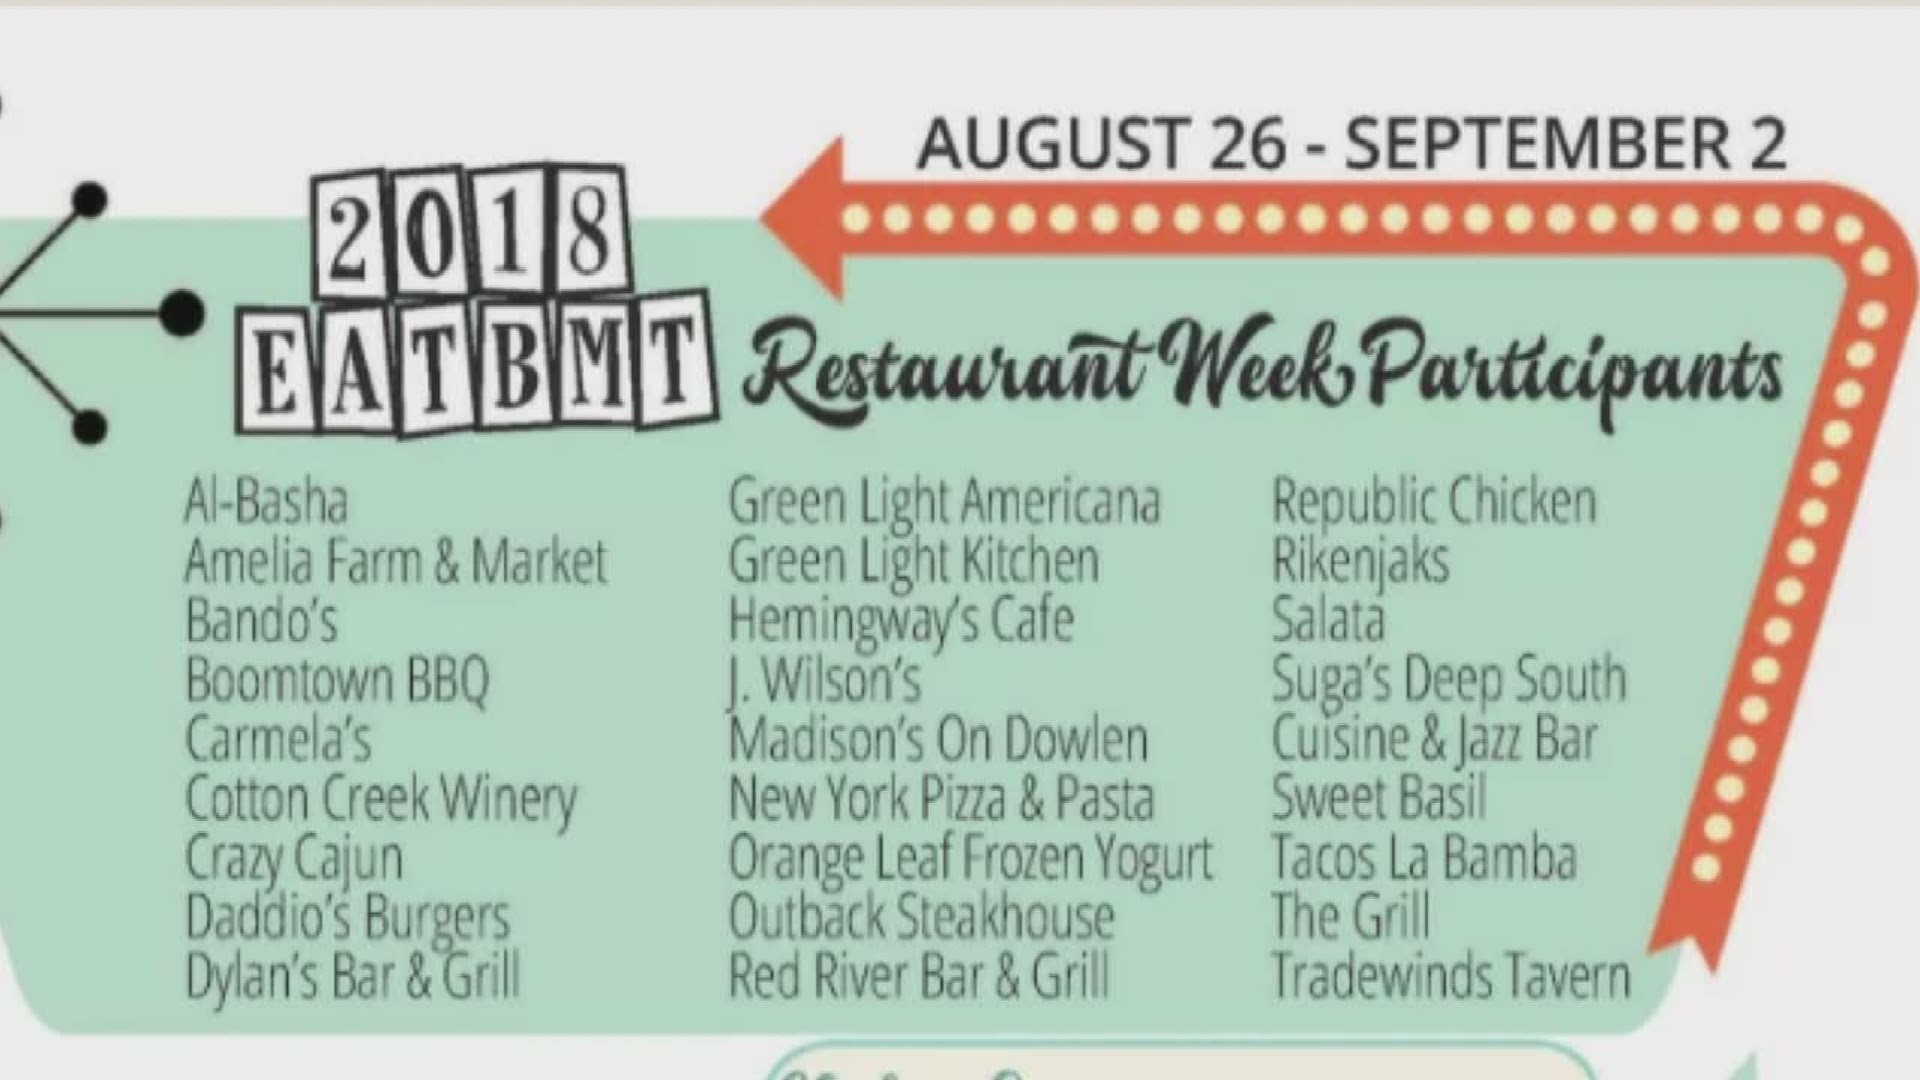 Beaumont restaurant week kicks off Sunday with deals at participating restaurants all week